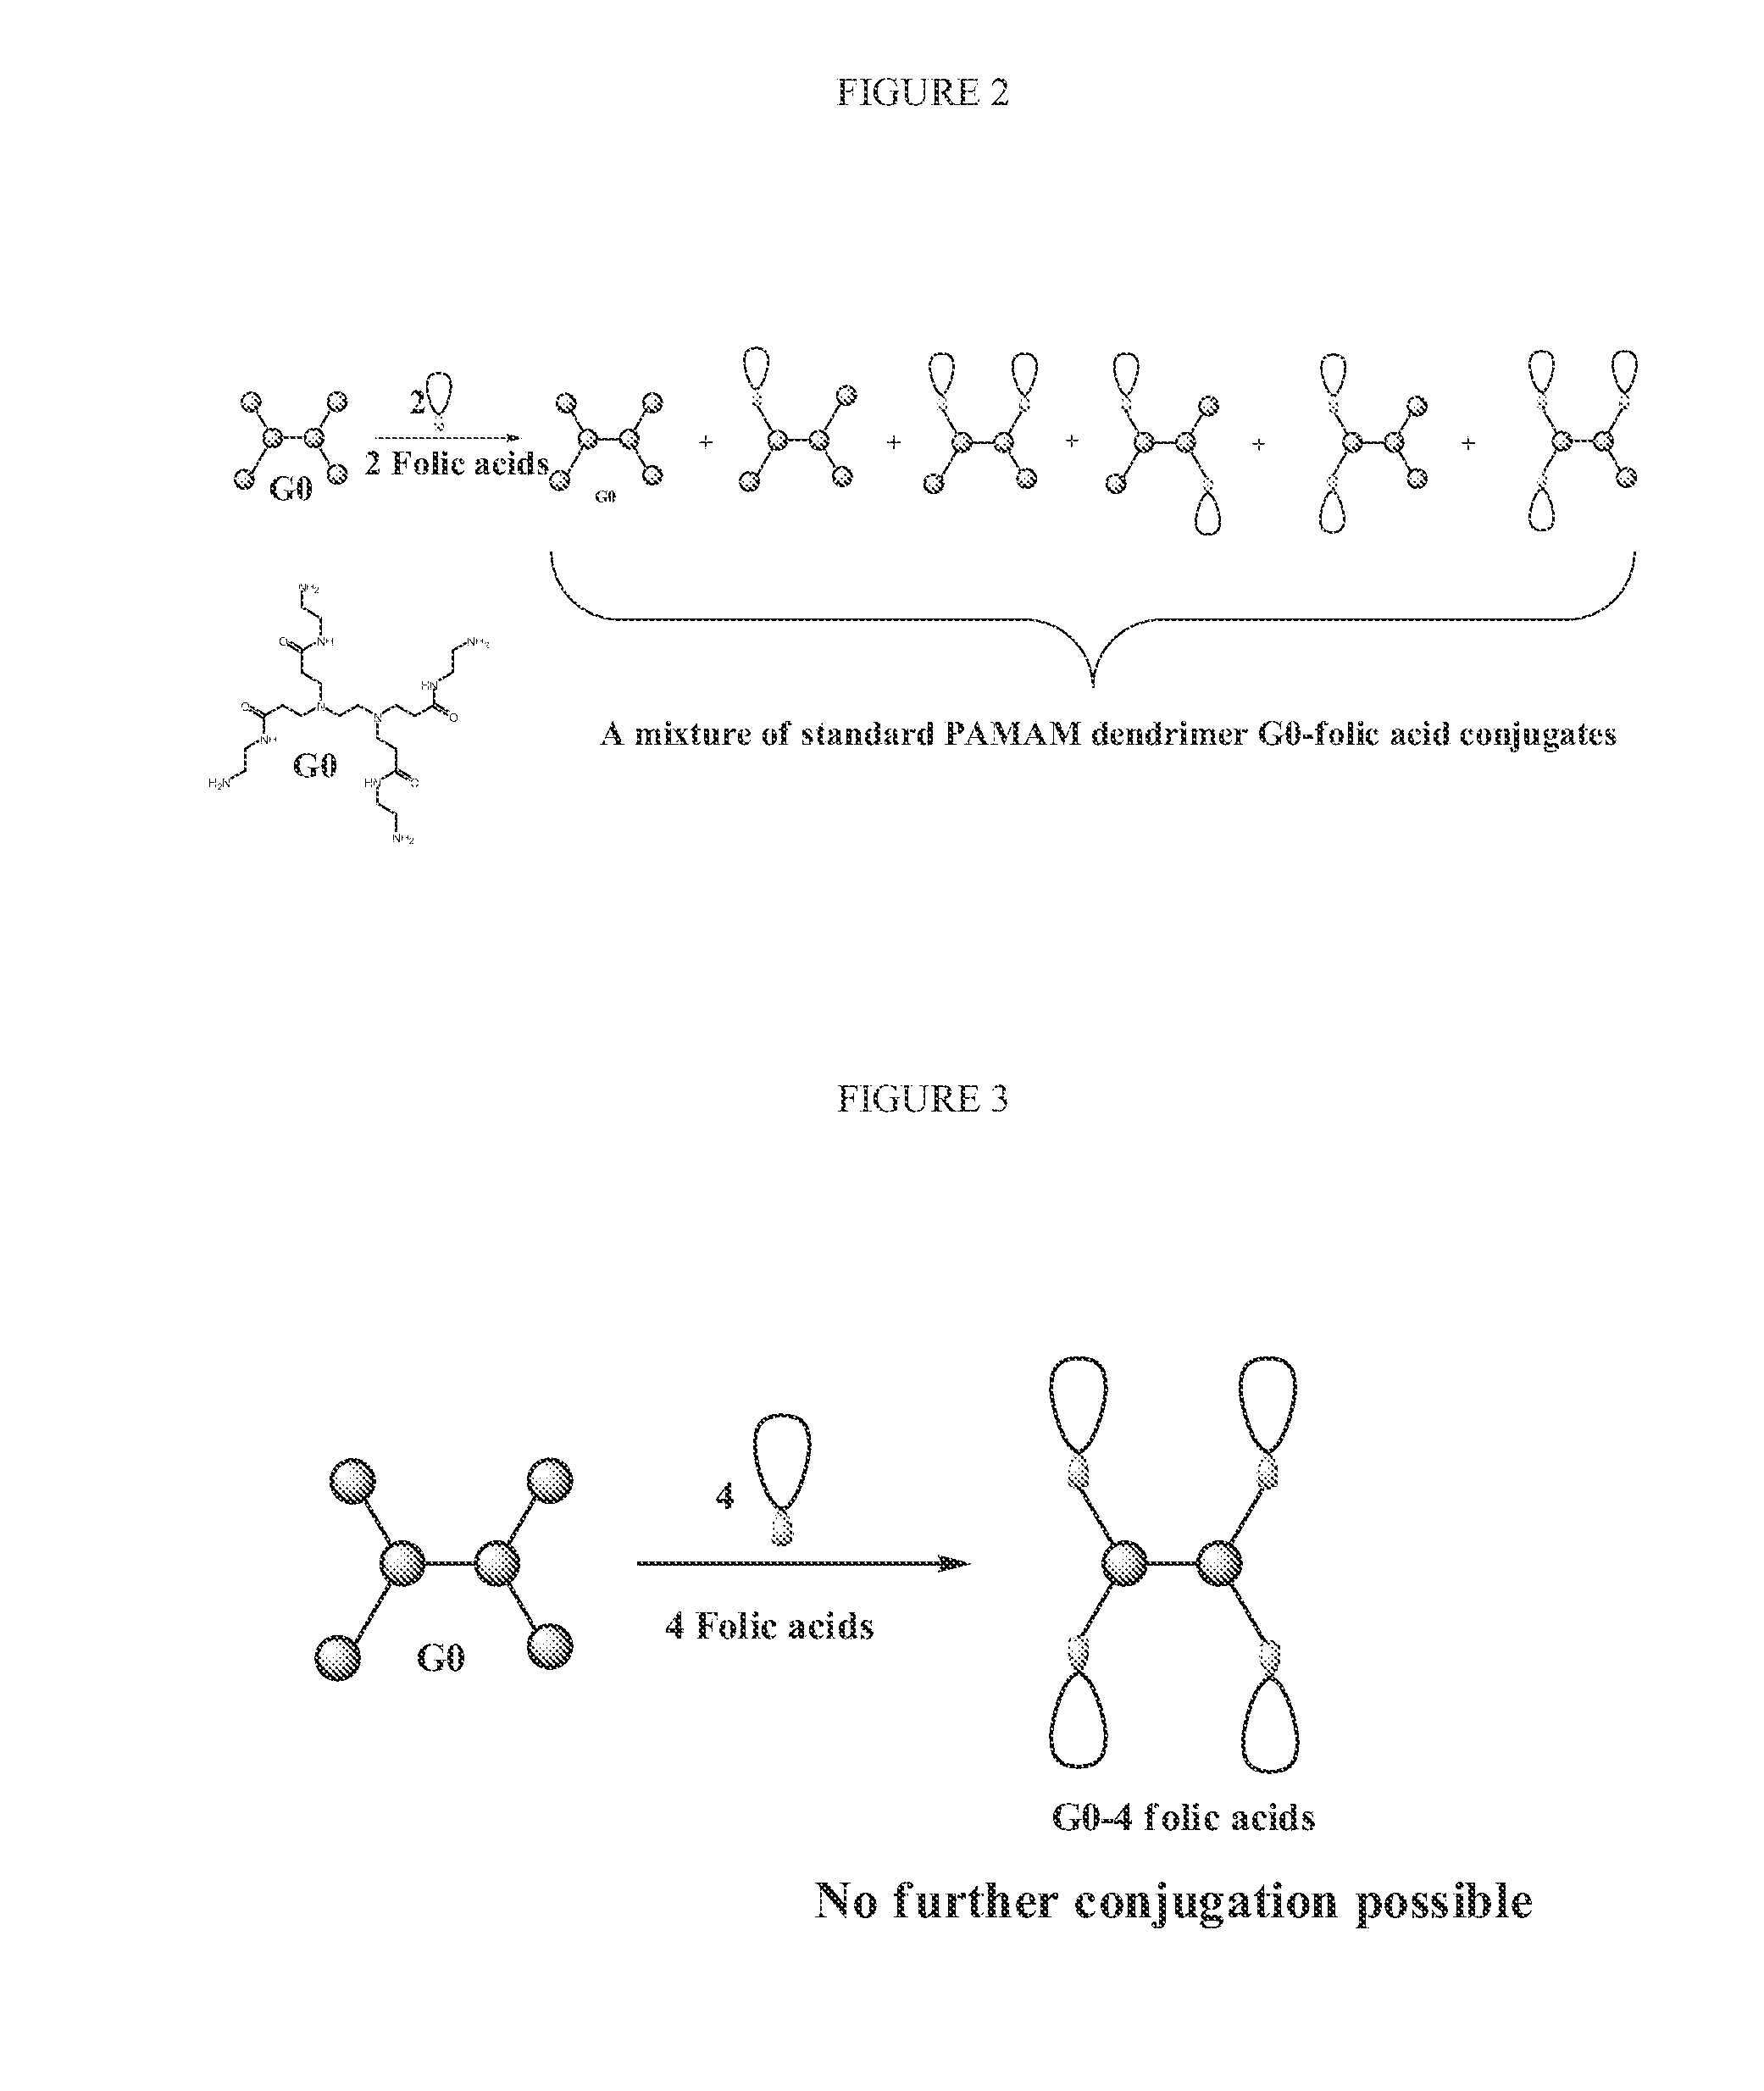 N-boc-dendrimers and their conjugates